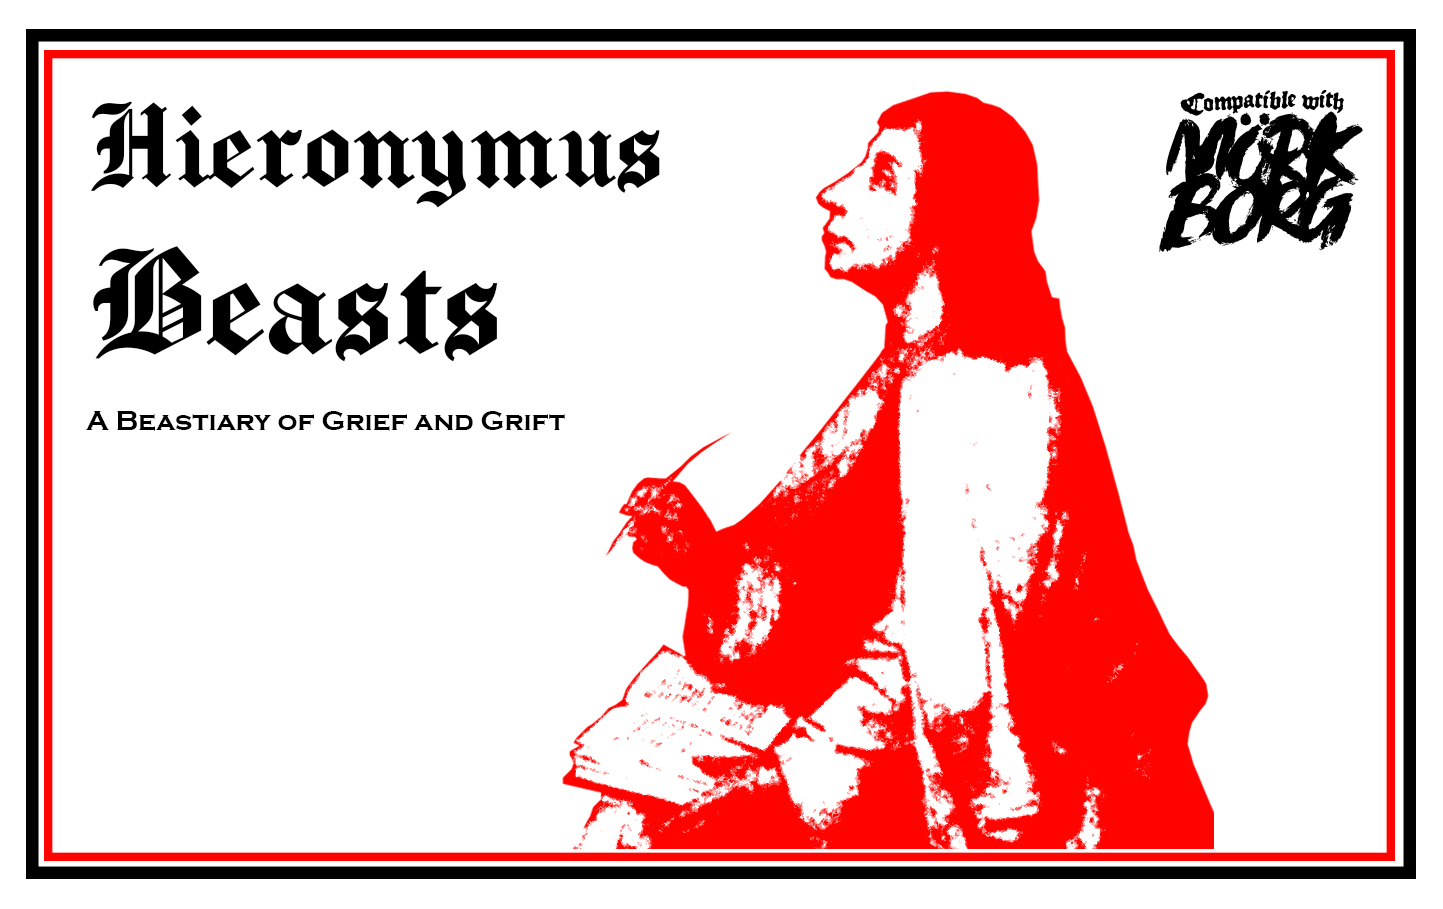 Hieronymus Beasts - The Prince of Shadows